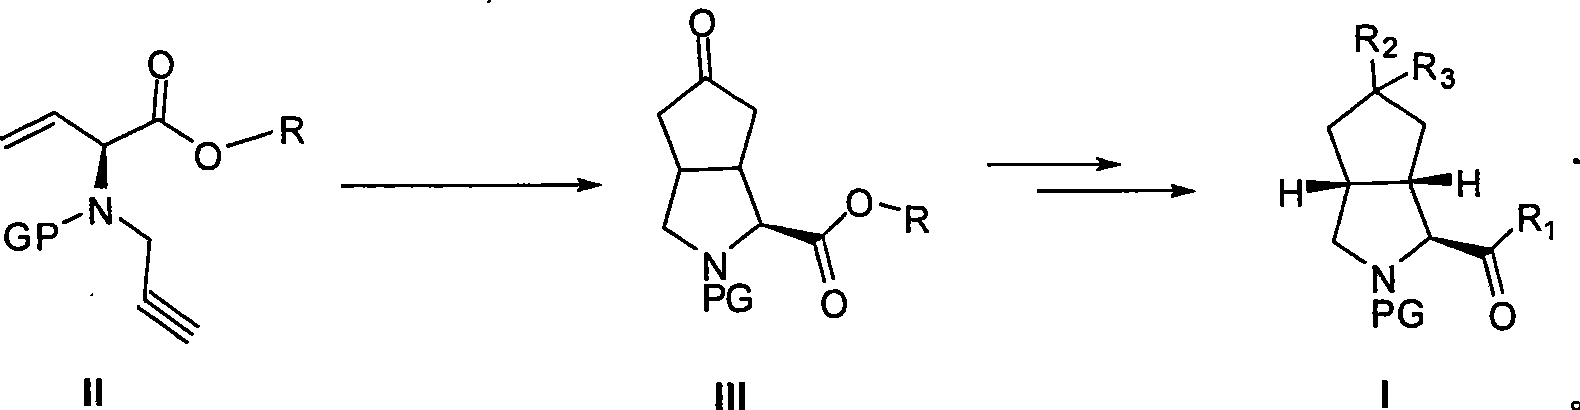 Octahydro cyclopenteno [c] pyrroletetrazole derivative and preparation thereof